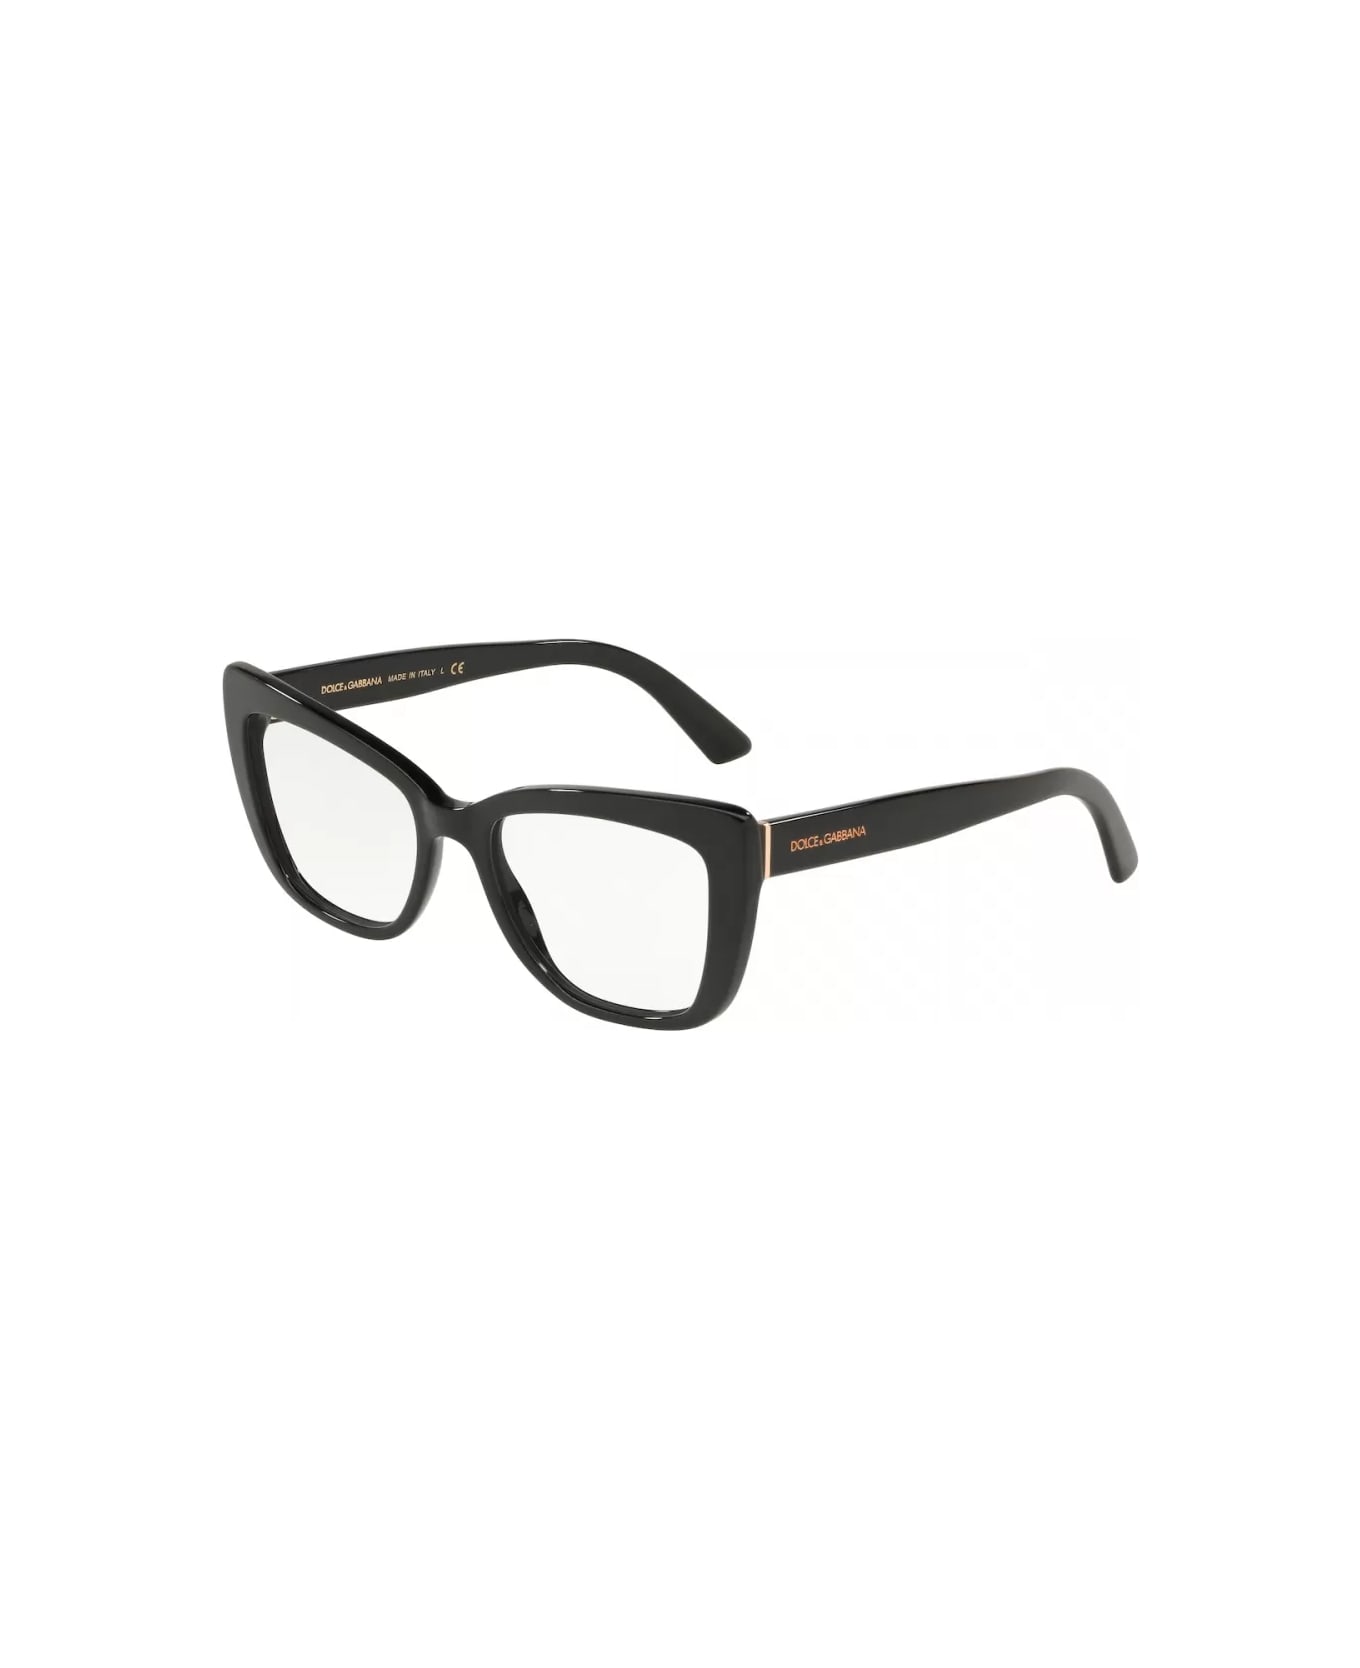 Dolce & Gabbana Eyewear DG3308 501 Glasses